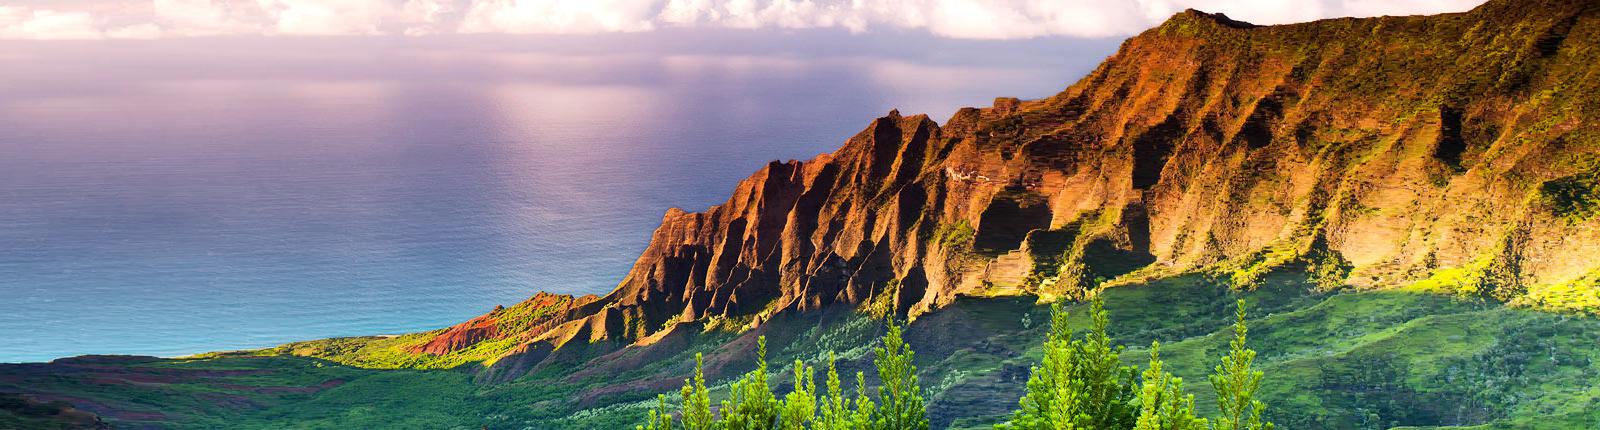 Colorful mountains overlooking blue ocean waters in Kauai, Hawaii